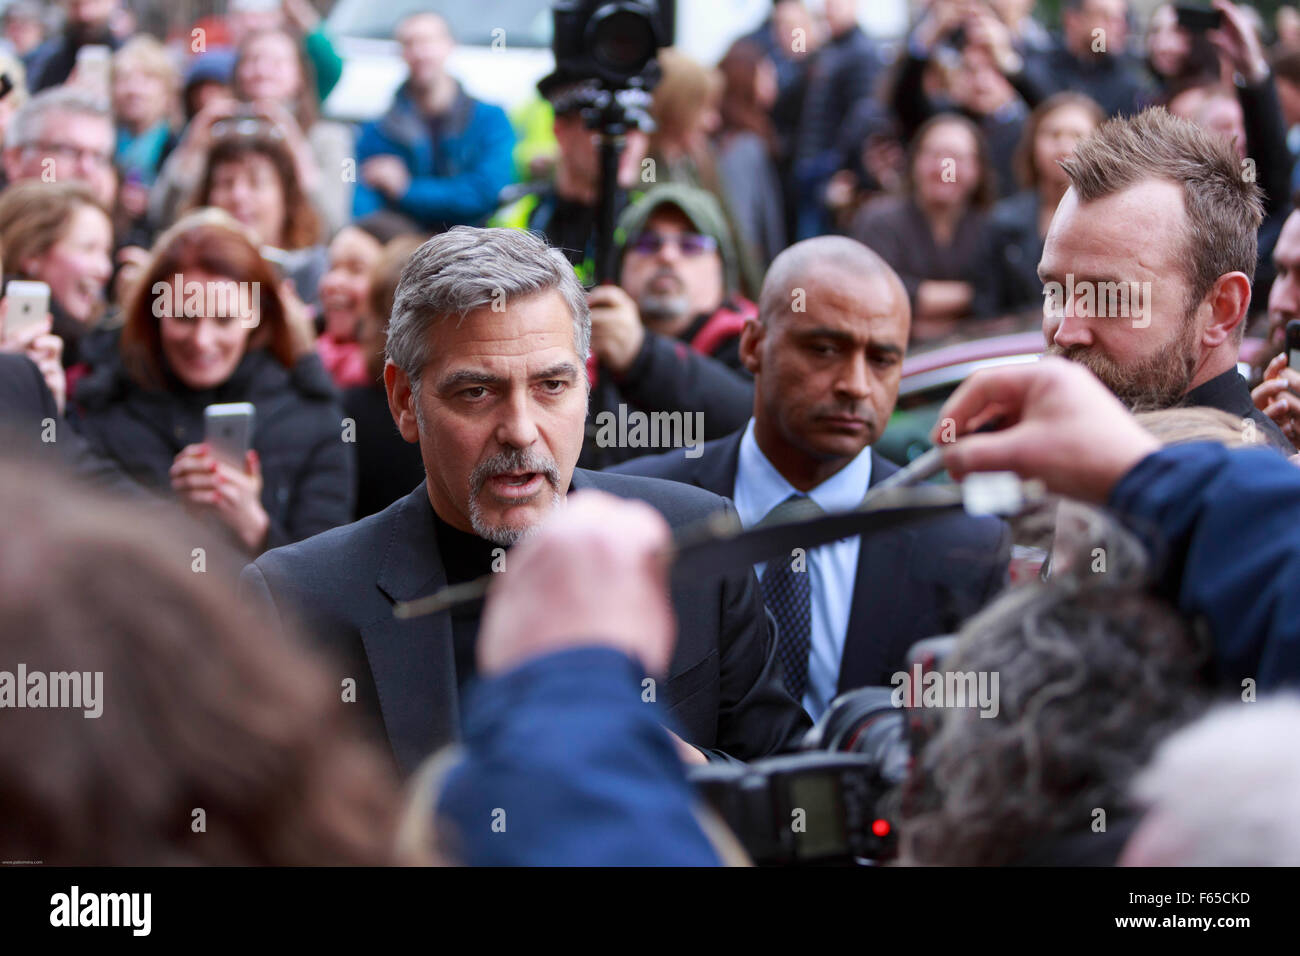 Edinburgh, UK. 12 November. George Clooney in Edinburgh zu sehen. Abgebildete George Clooney. Pako Mera/Alamy Live-Nachrichten. Stockfoto